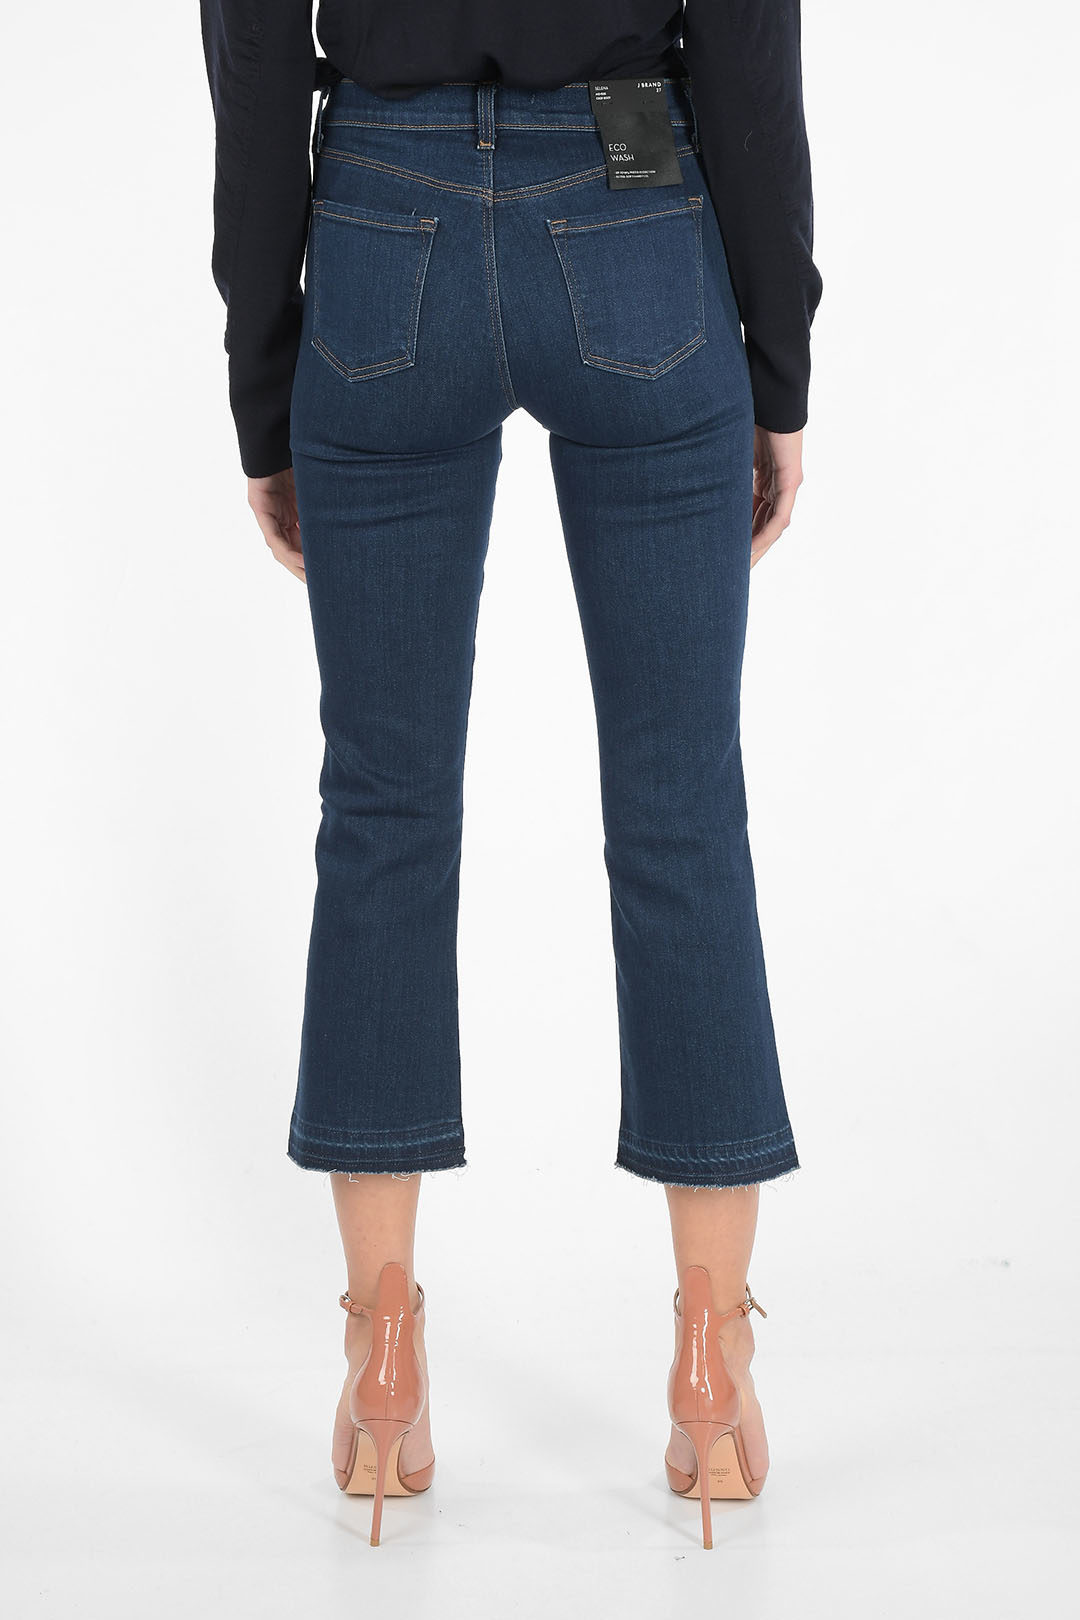 J Brand Denim Mid-Rise Cropped Jeans Selena in Blau Damen Bekleidung Jeans Bootcut Jeans 